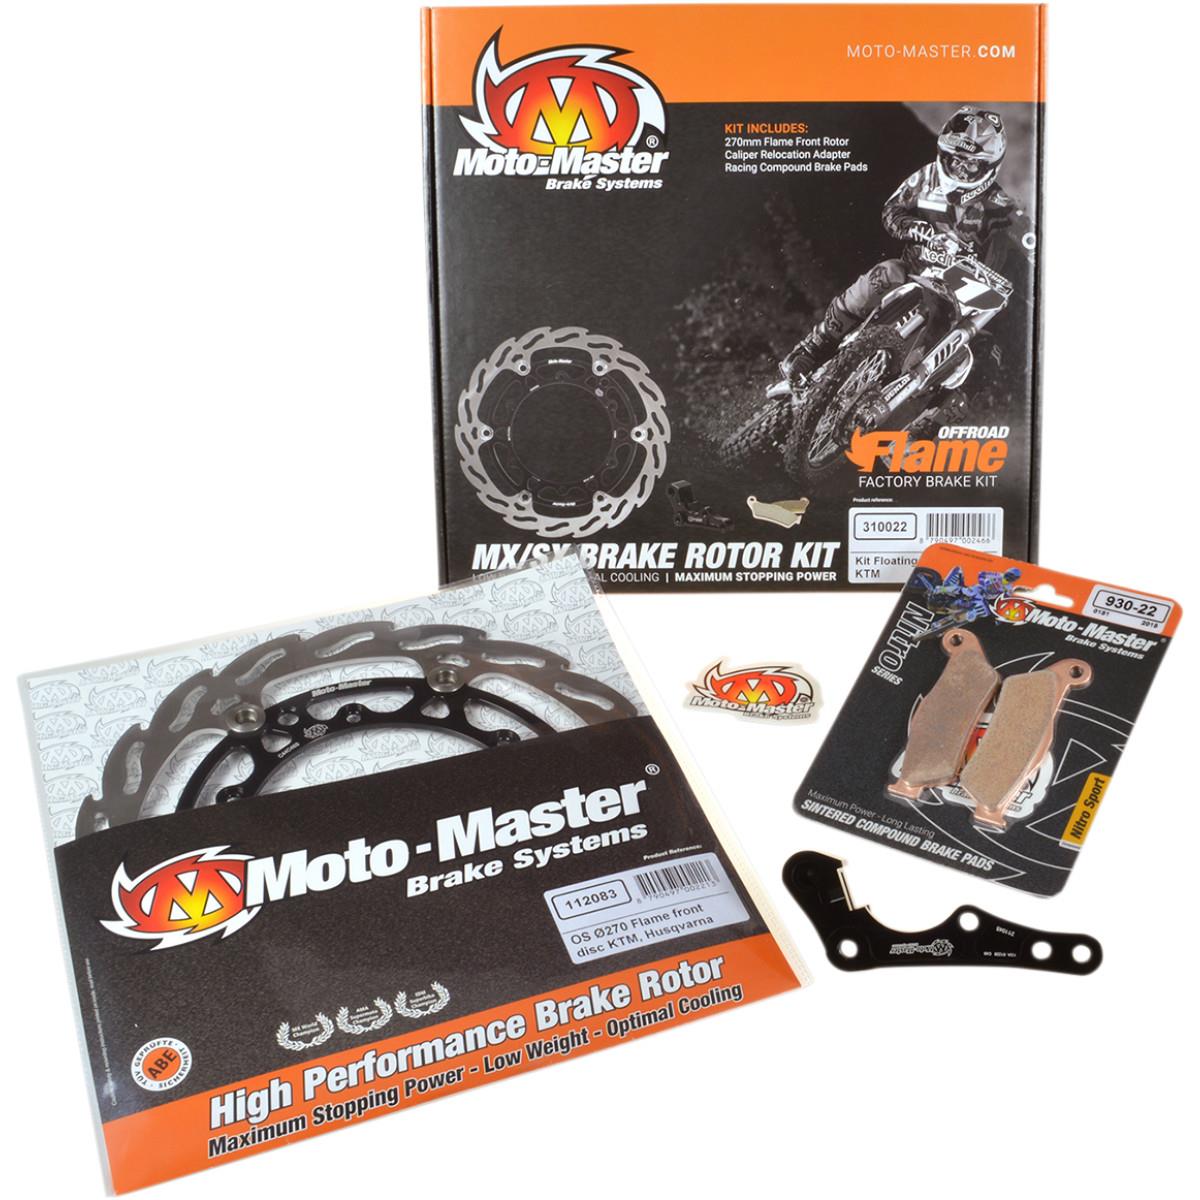 Moto-Master Bremsscheiben-Kit Flame Oversize